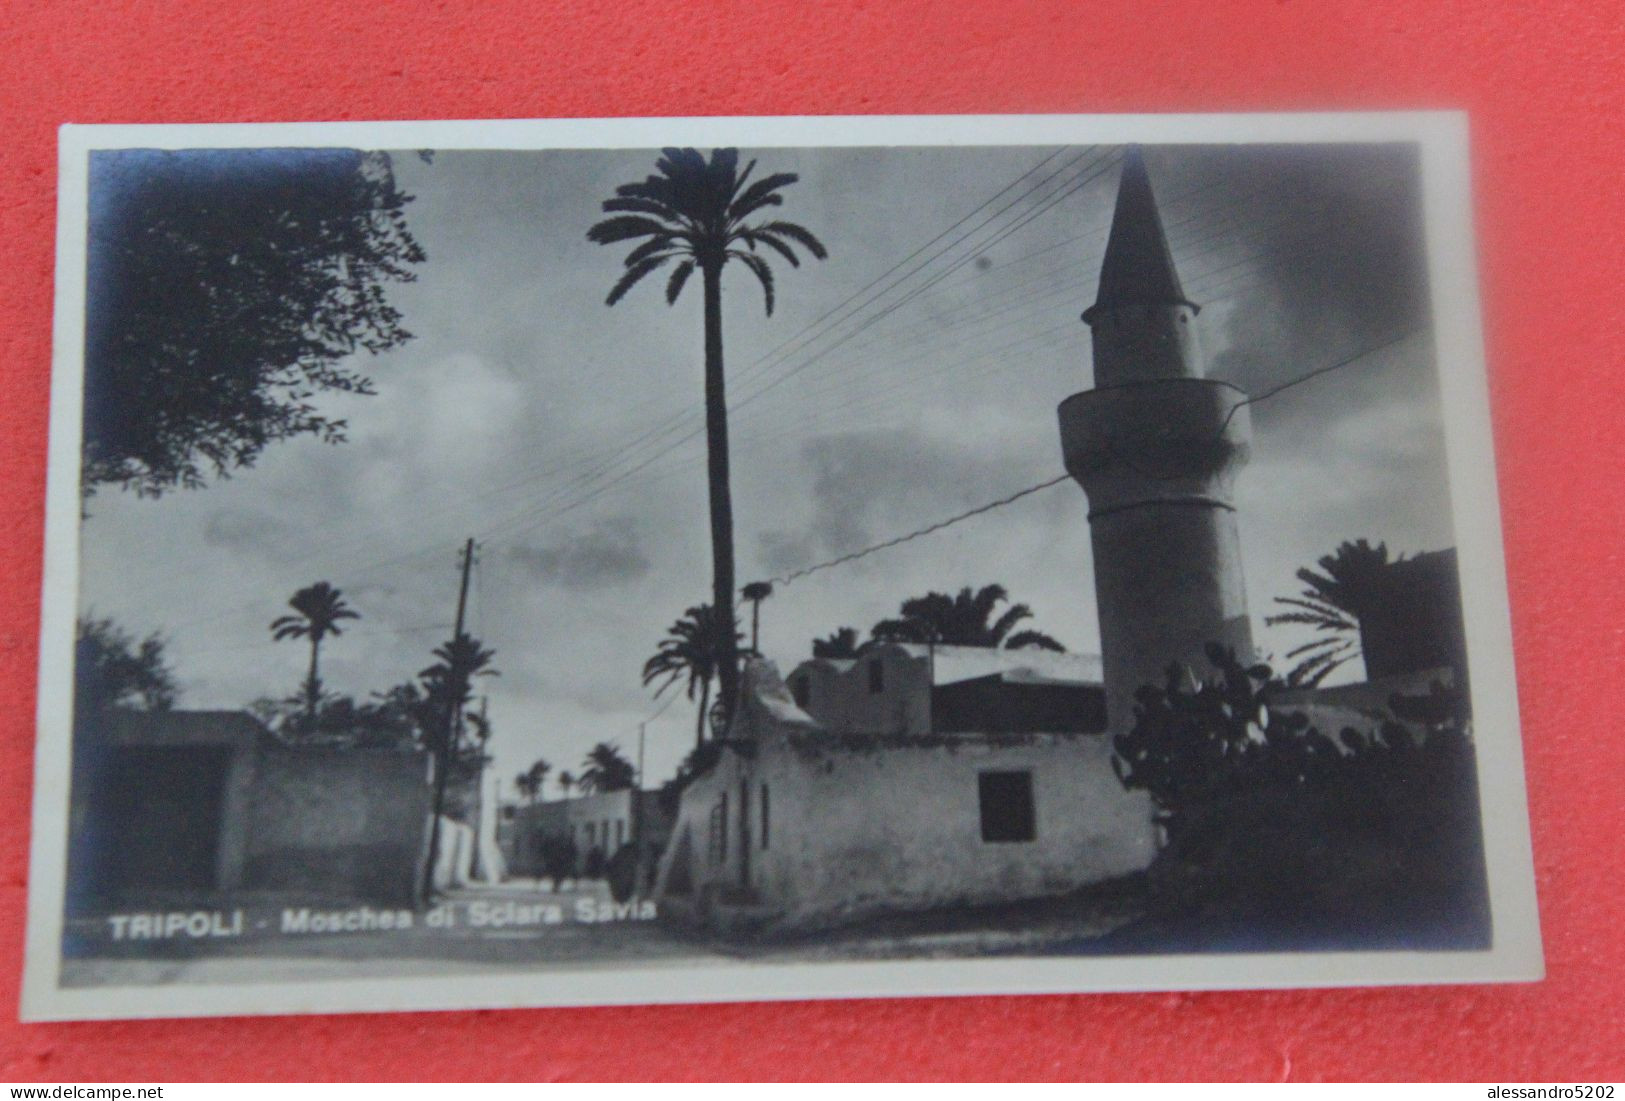 Libya Tripoli Moschea Sciara Savia Ed. Haggiag NV - Libya